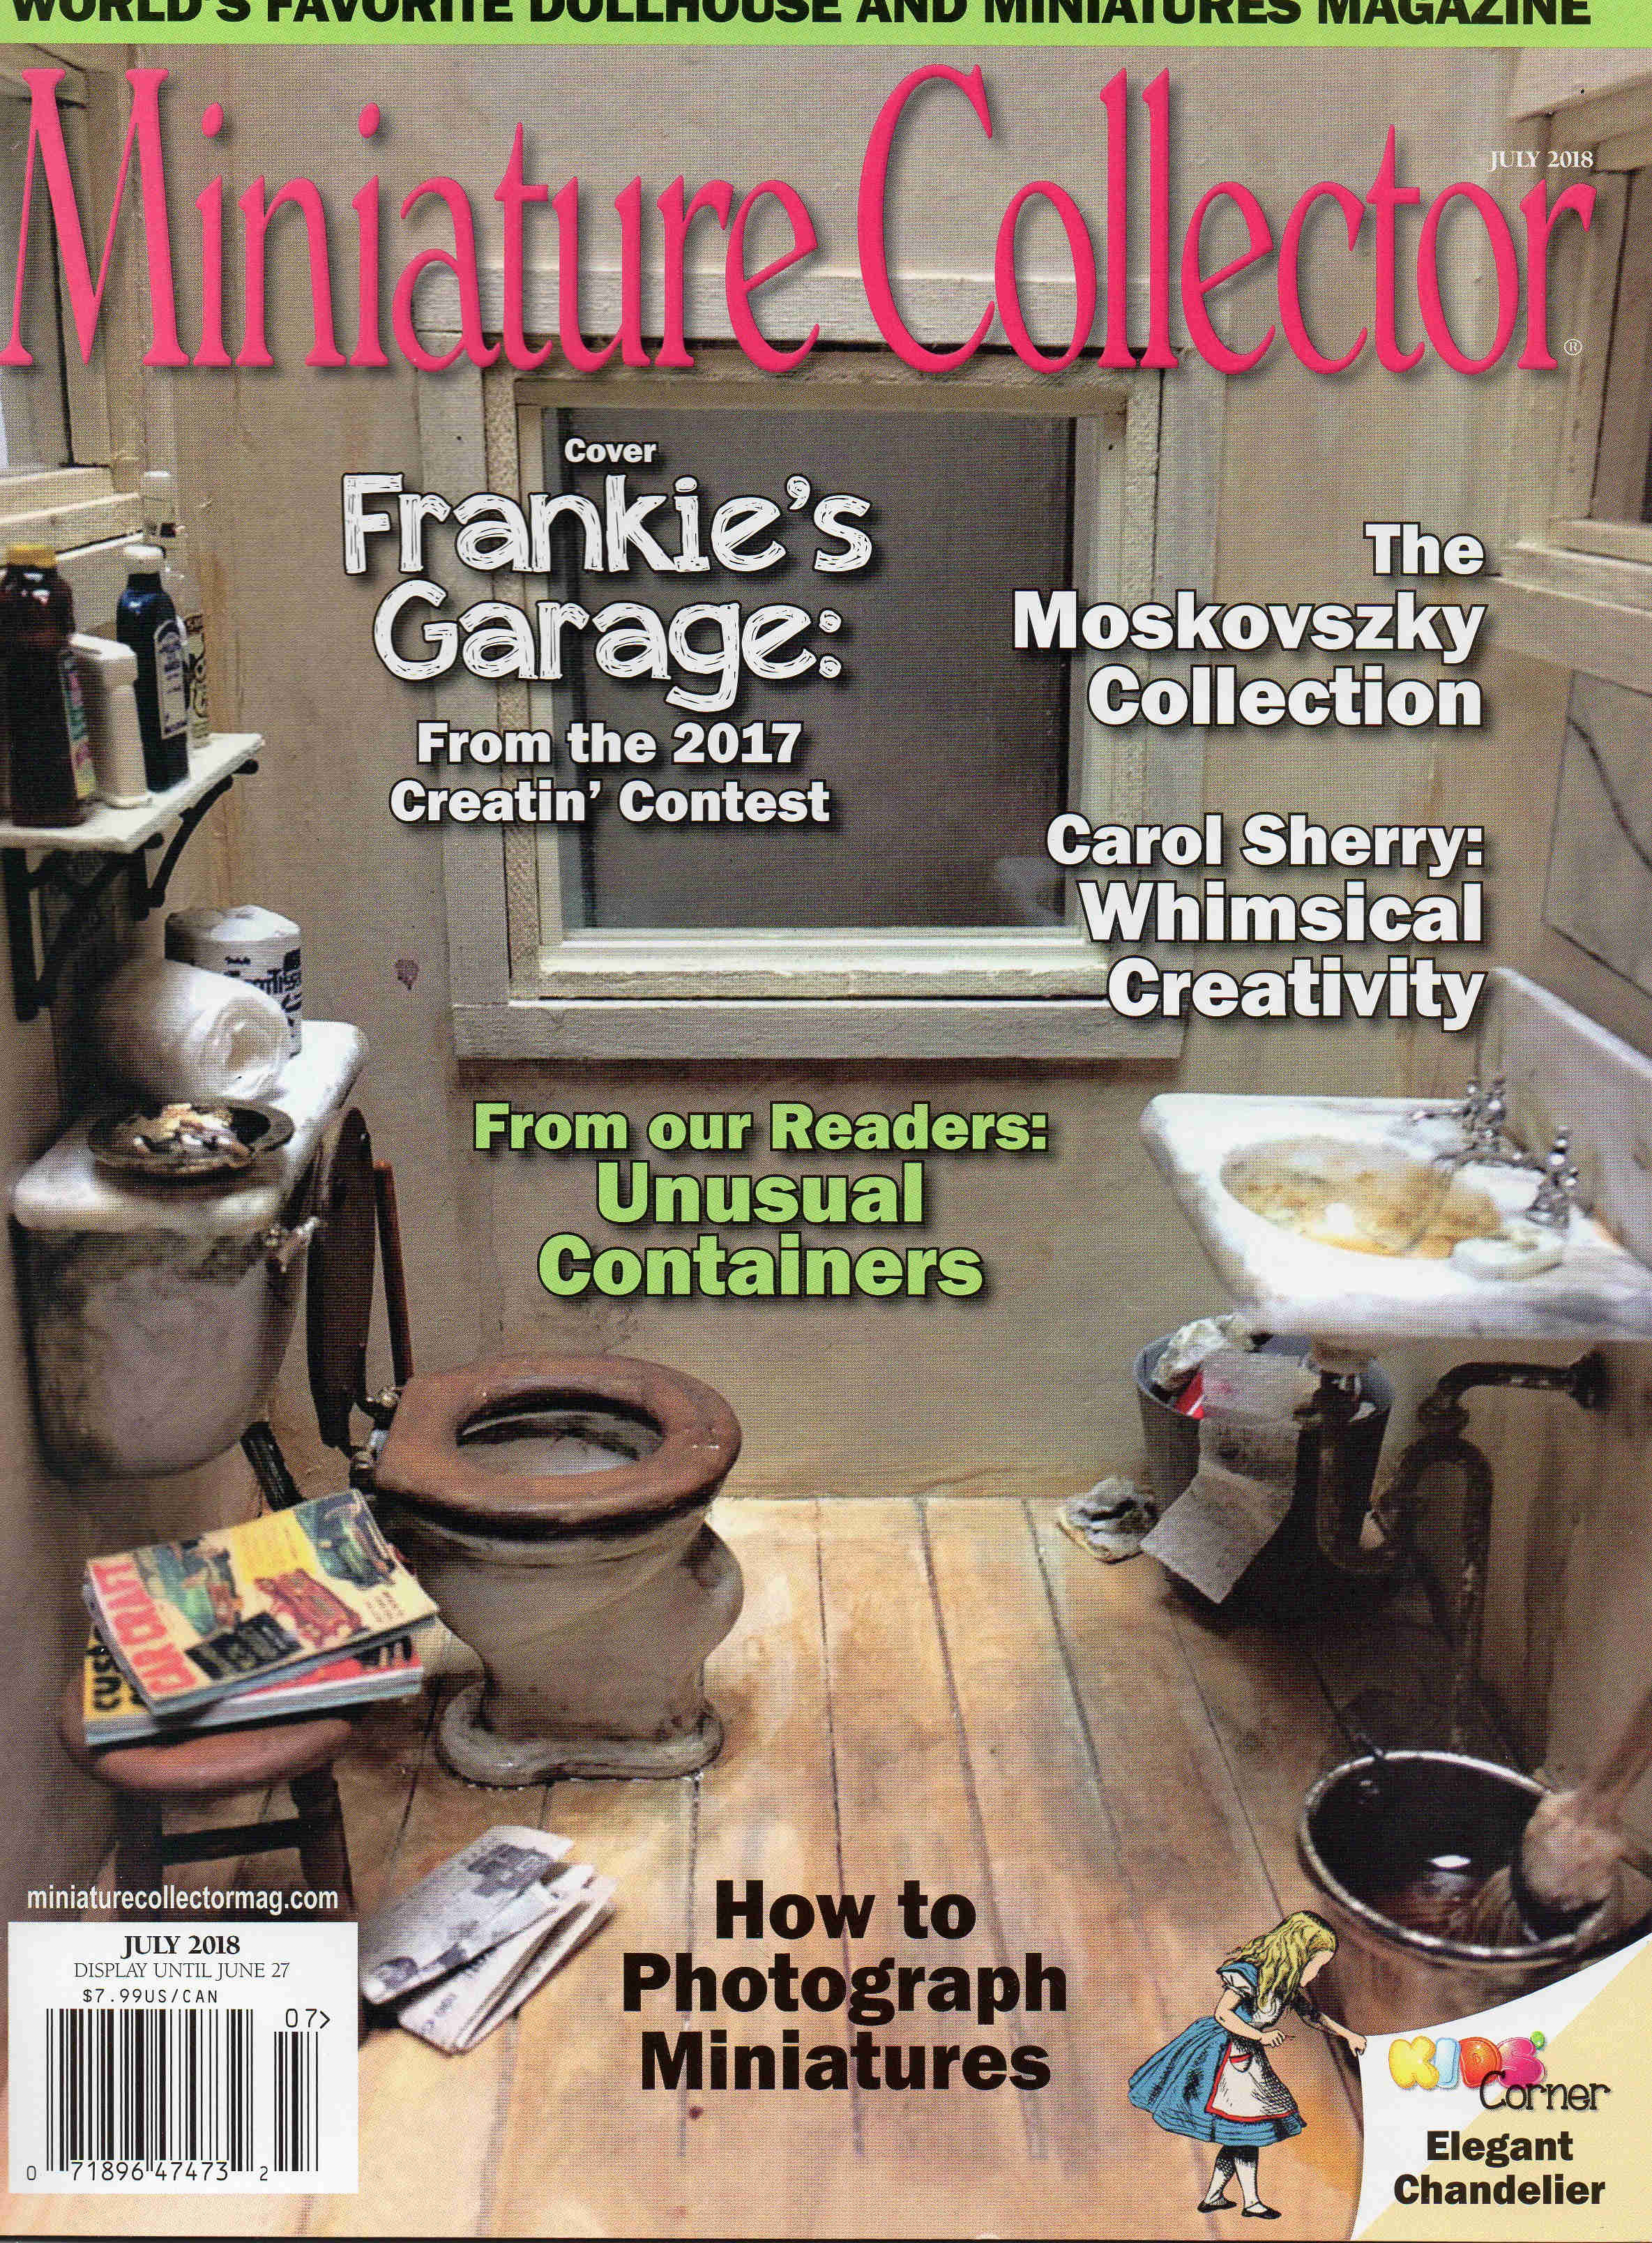 Magazine issue